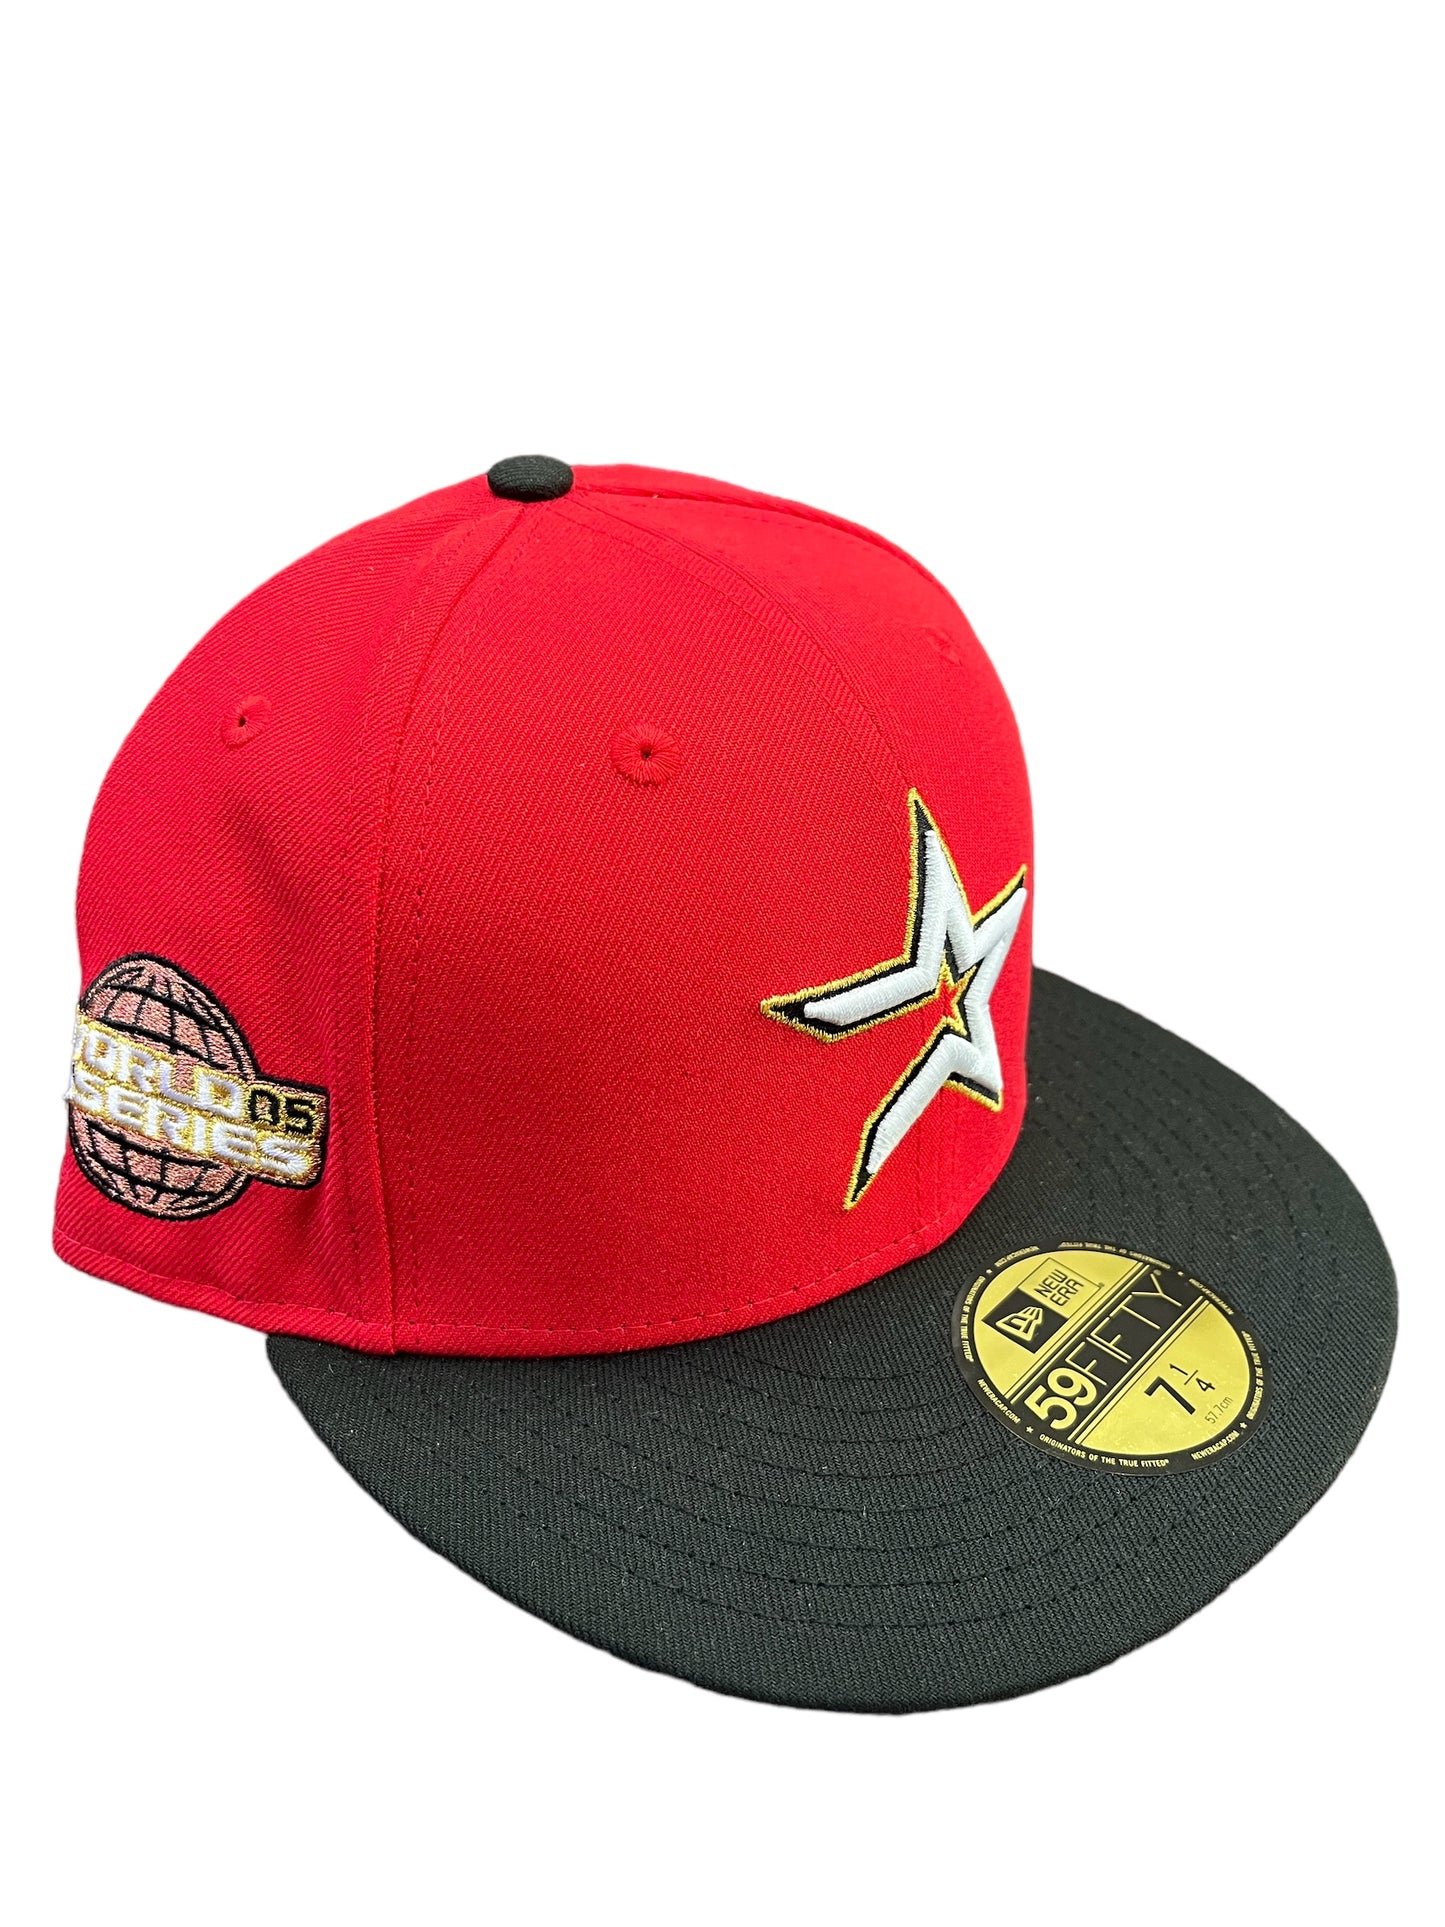 Houston Astros “Red / Black” Hat